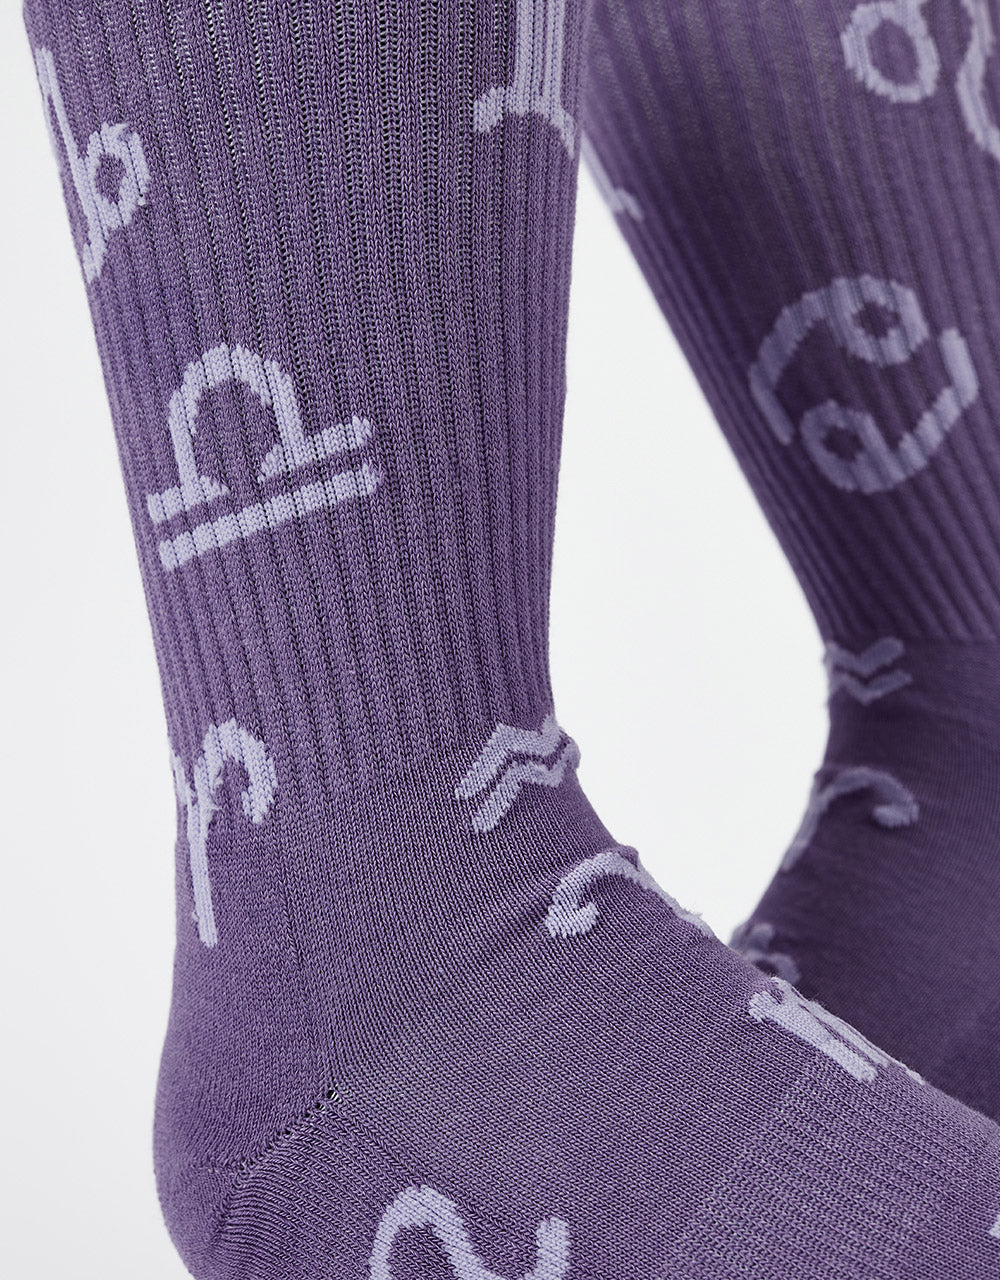 Route One Zodiac Socks - Lavender Blue